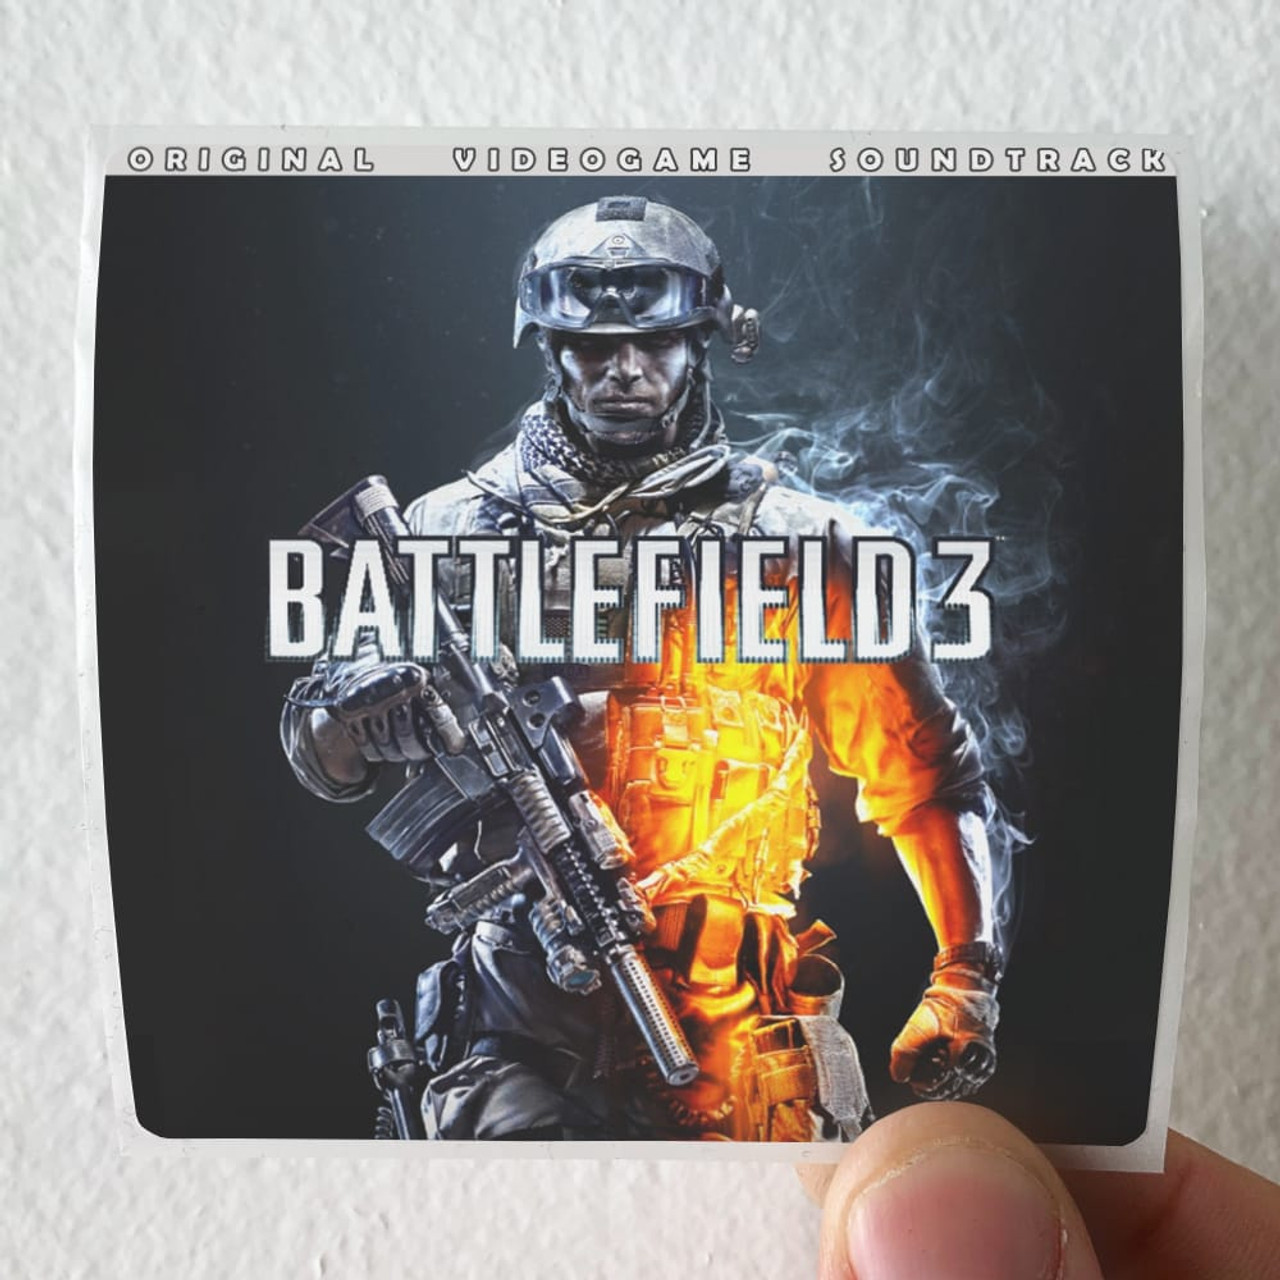 Battlefield 4 (Original Soundtrack) - Album by Johan Skugge, Jukka